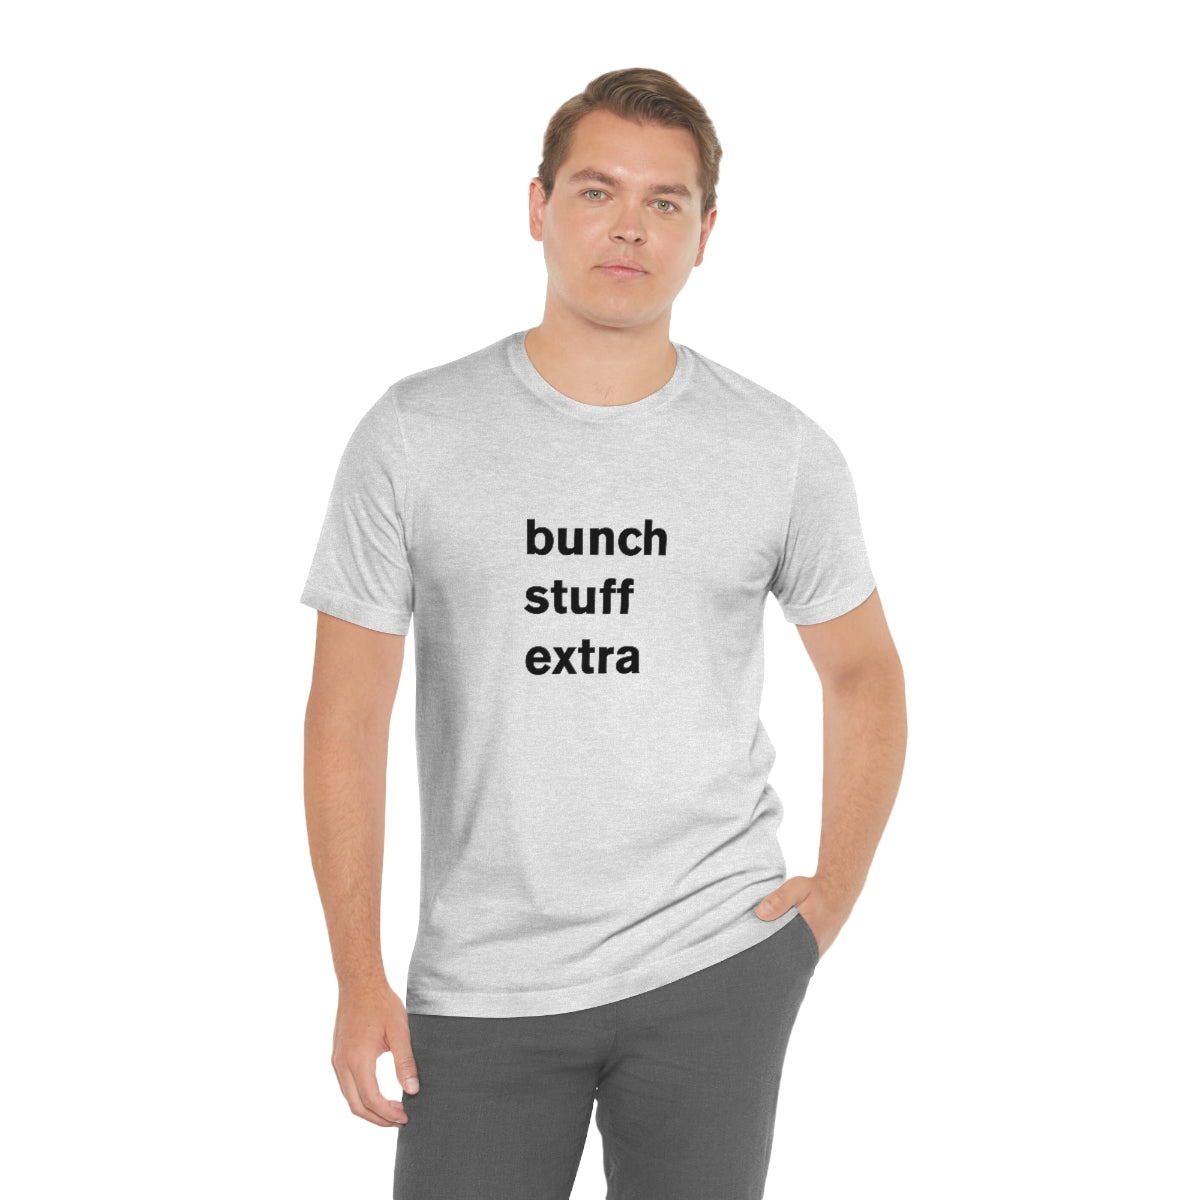 bunch stuff extra - t-shirt